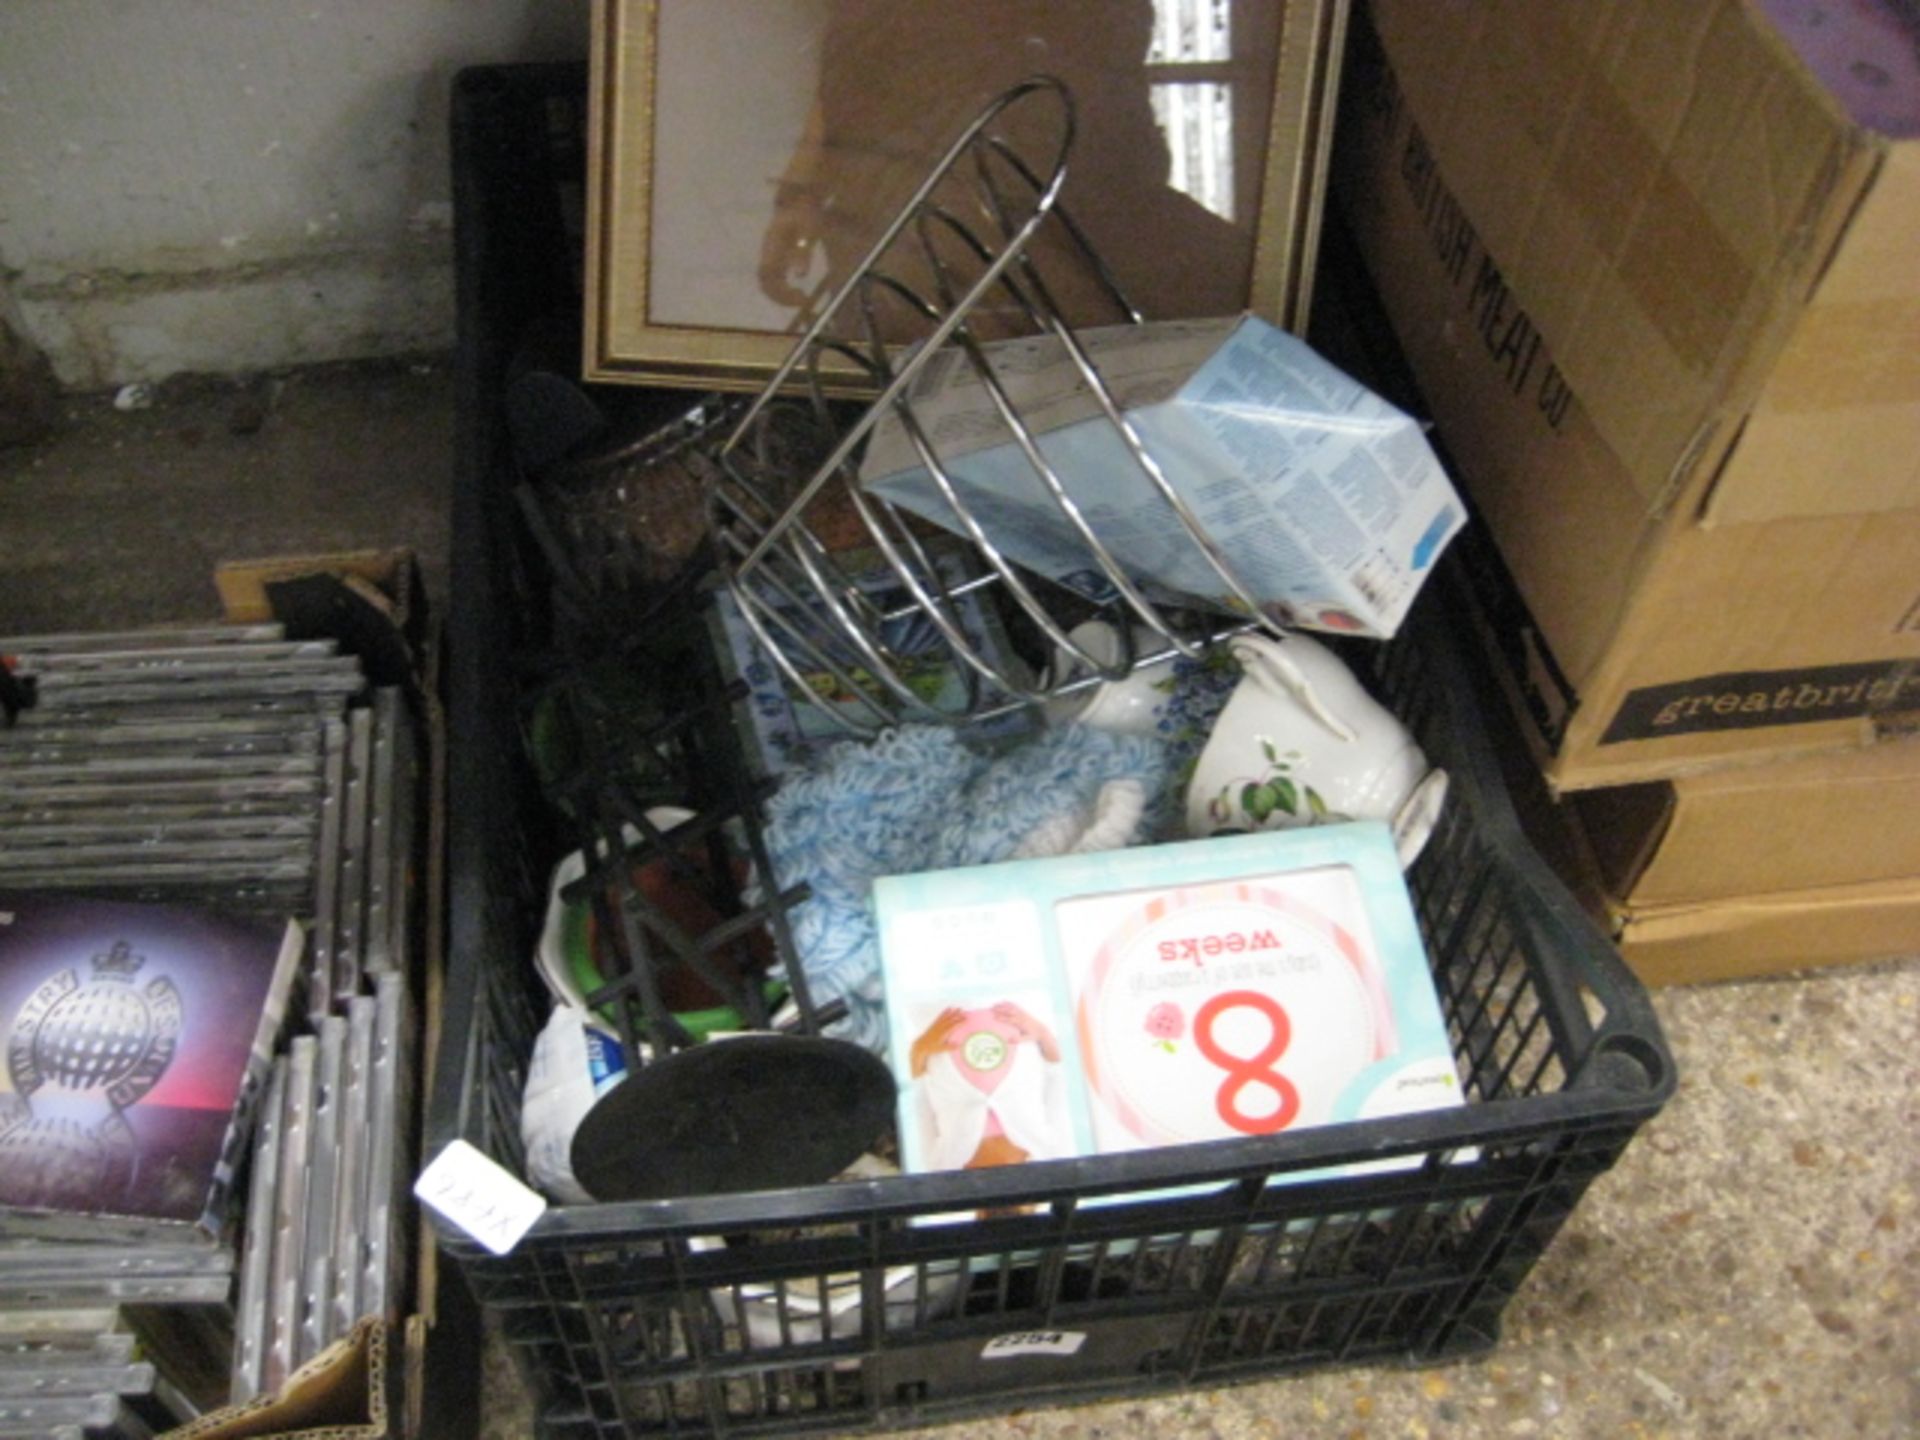 Crate containing mixed housewares